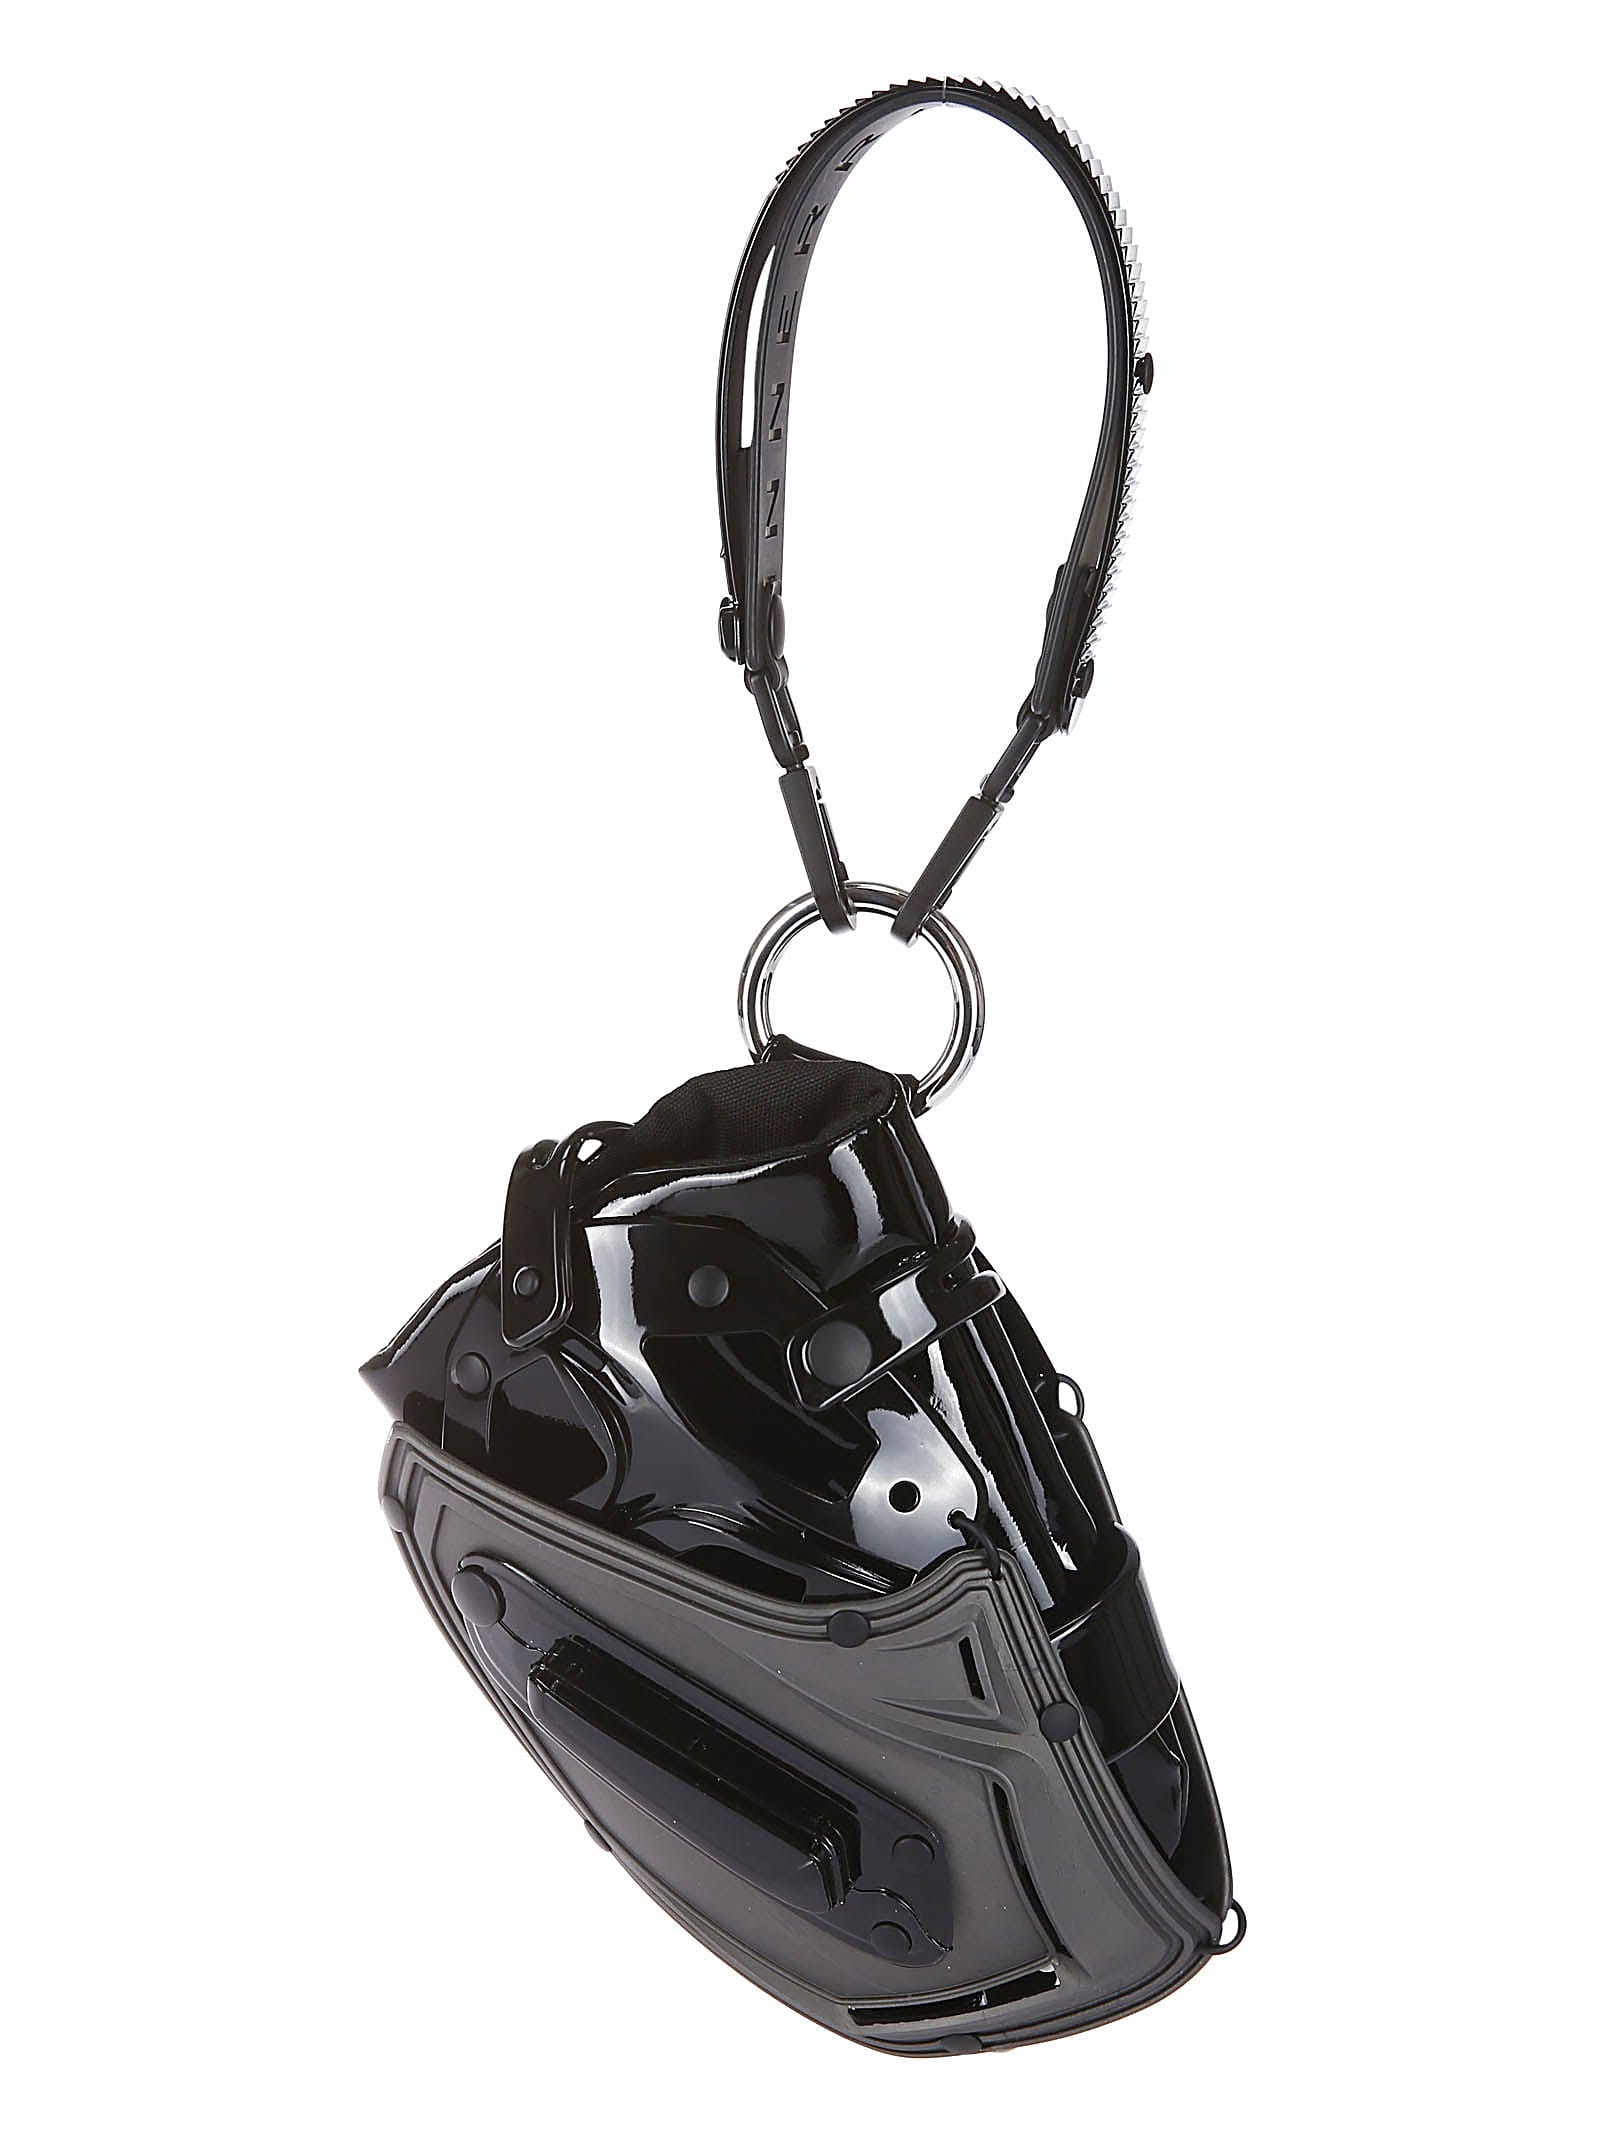 Innerraum Object I51 Wristlet Phone Bag In Ranthracite